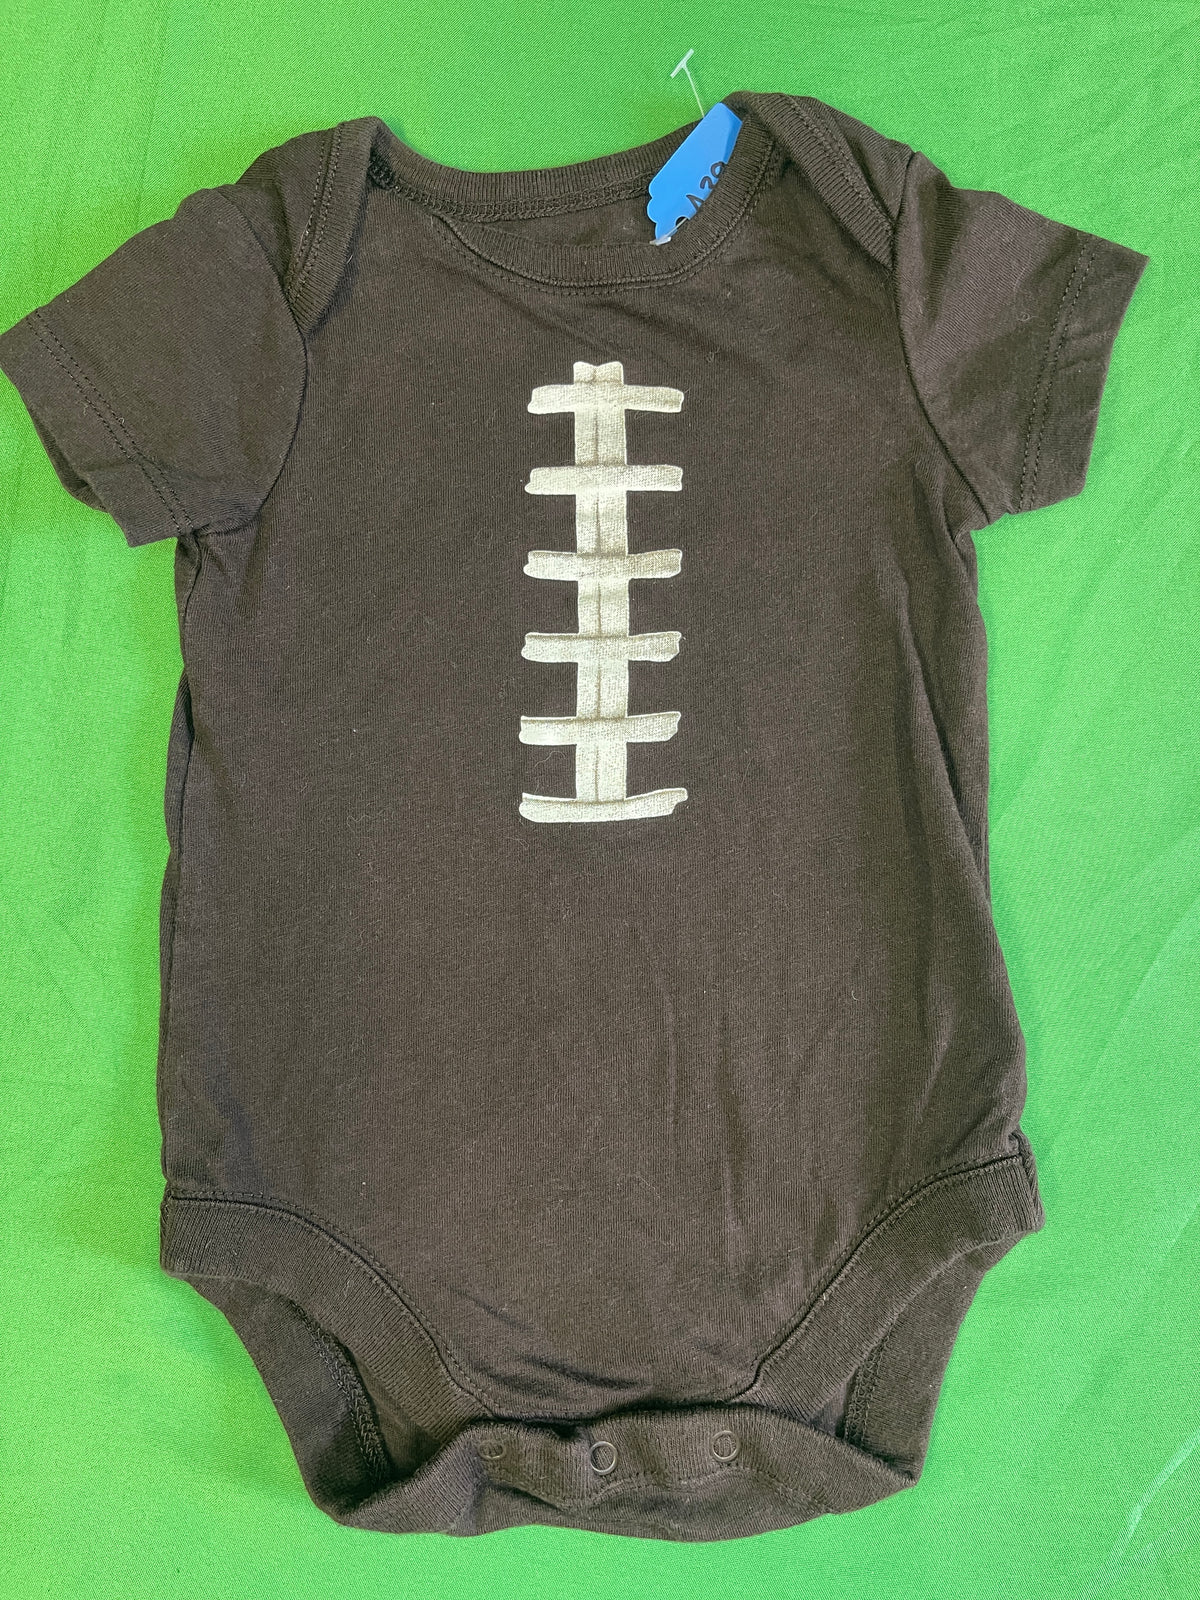 American Football Pigskin Style Bodysuit/Vest Infant Baby 0-3 Months